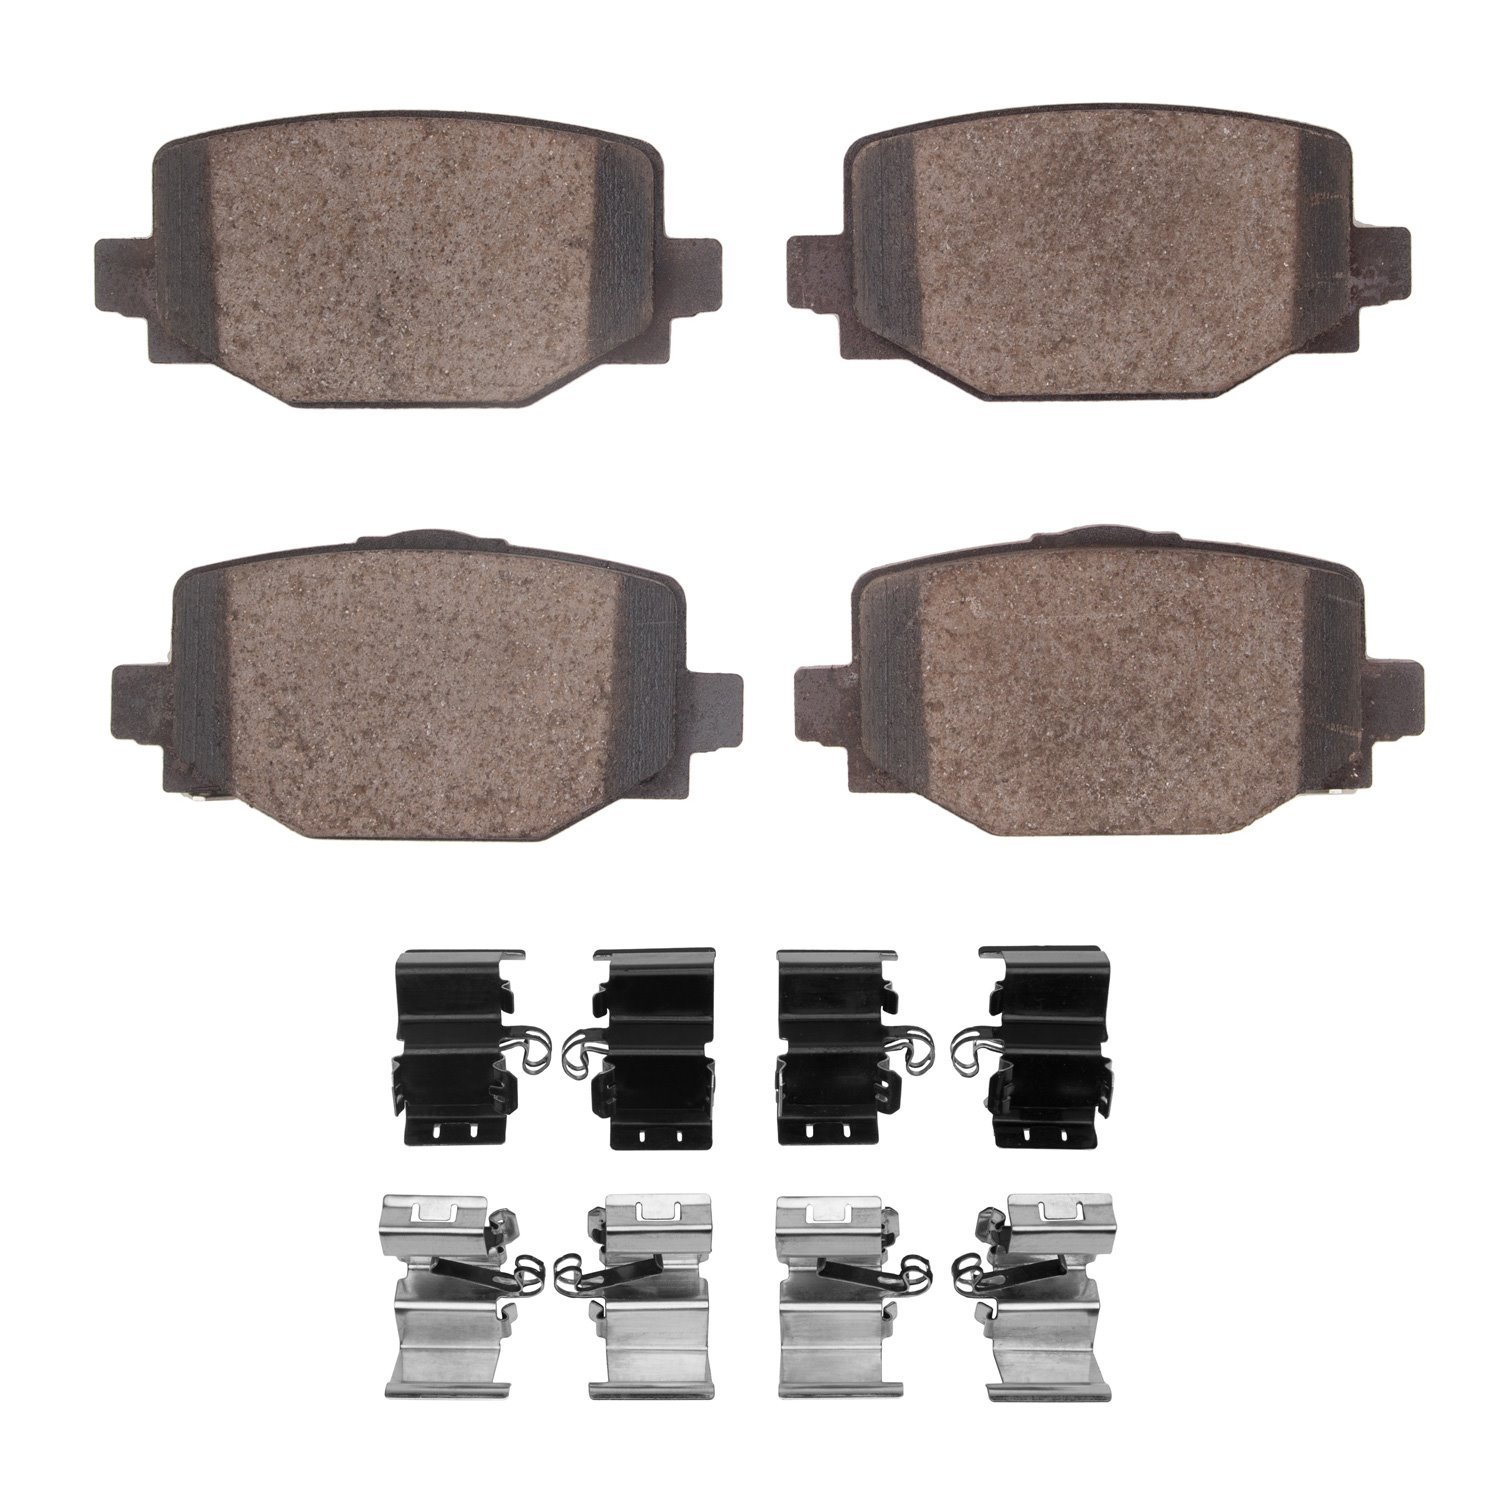 1310-2191-01 3000-Series Ceramic Brake Pads & Hardware Kit, Fits Select Infiniti/Nissan, Position: Rear